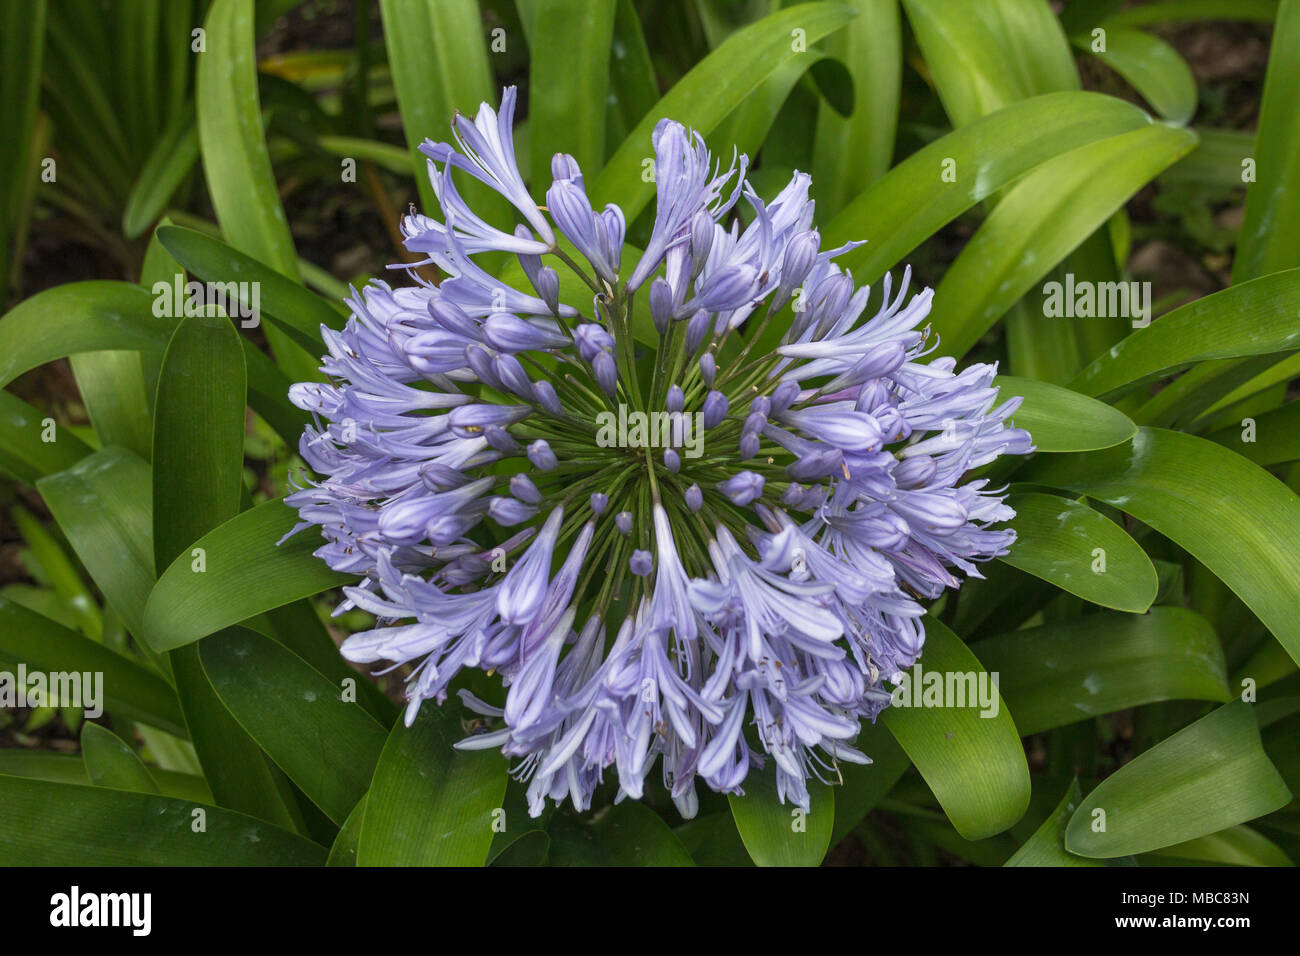 Colourful African Blue Lily - Agapanthus umbellatus - in Mi Jardin es su Jardin ornamental garden in Boquete, Panama Stock Photo